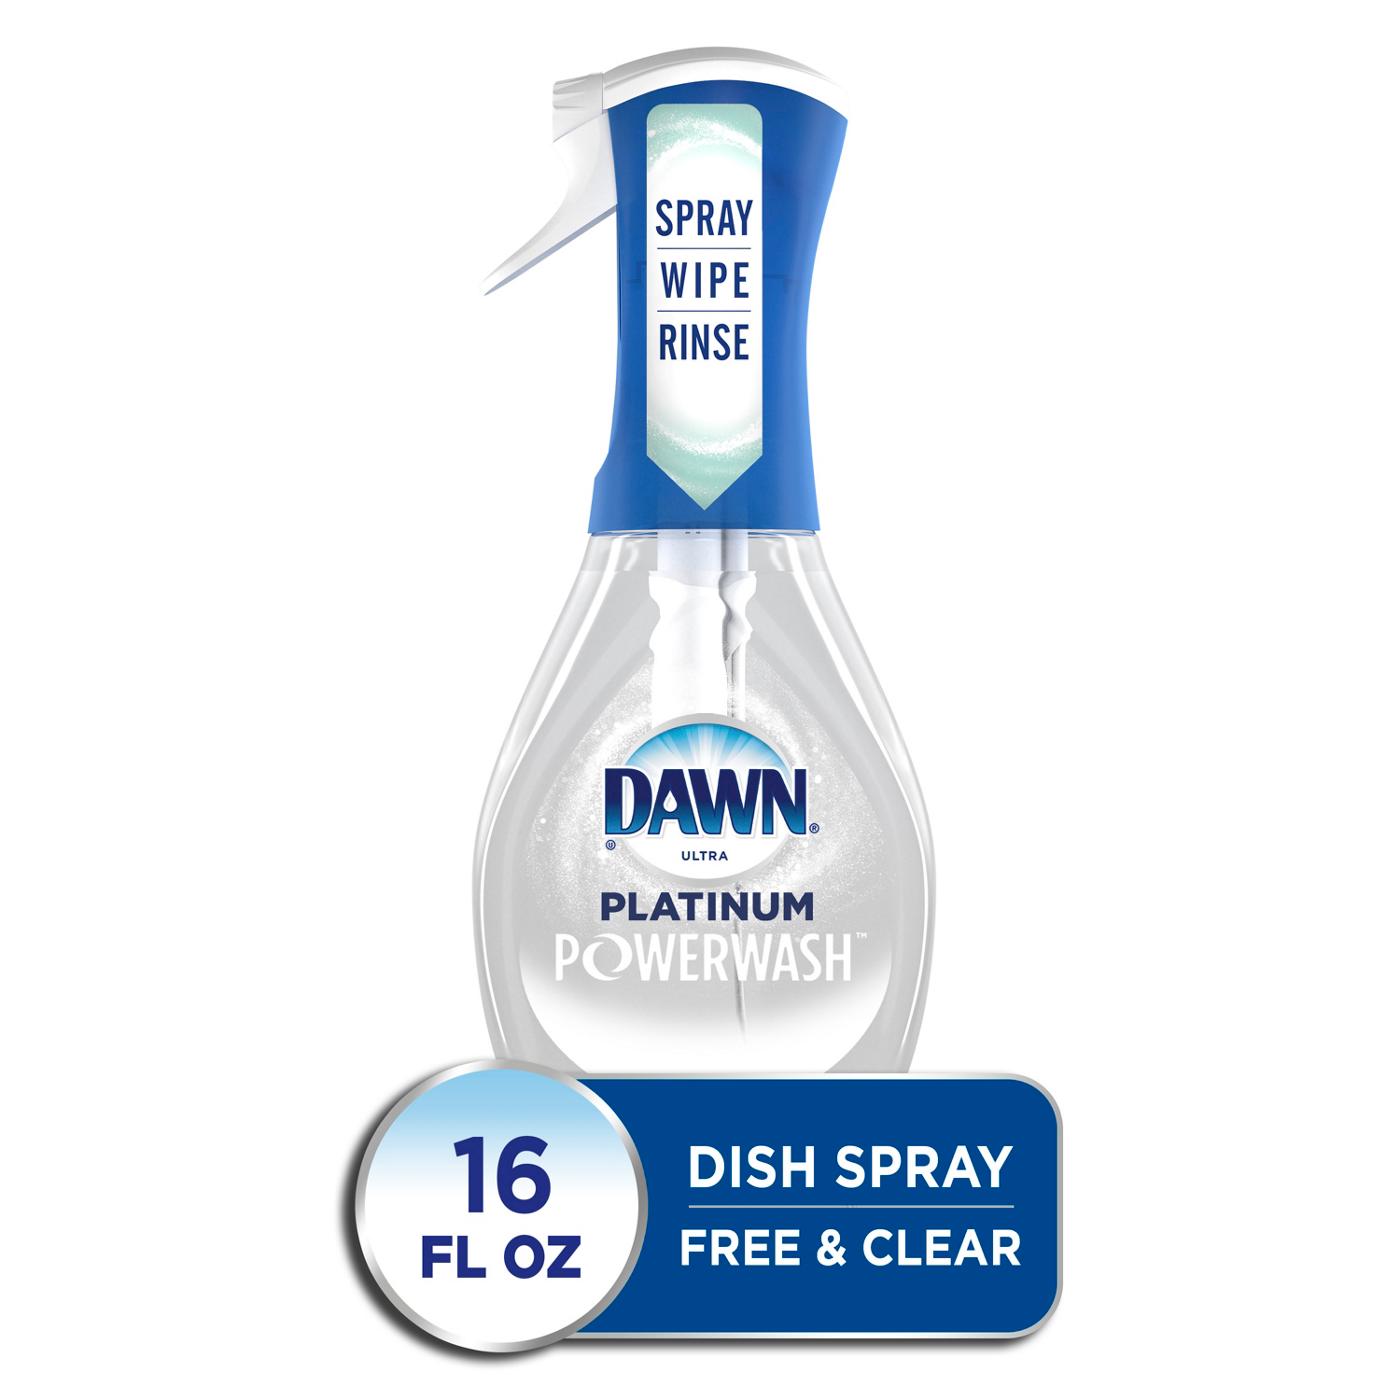 Dawn Platinum Powerwash Free & Clear Dish Spray; image 2 of 3